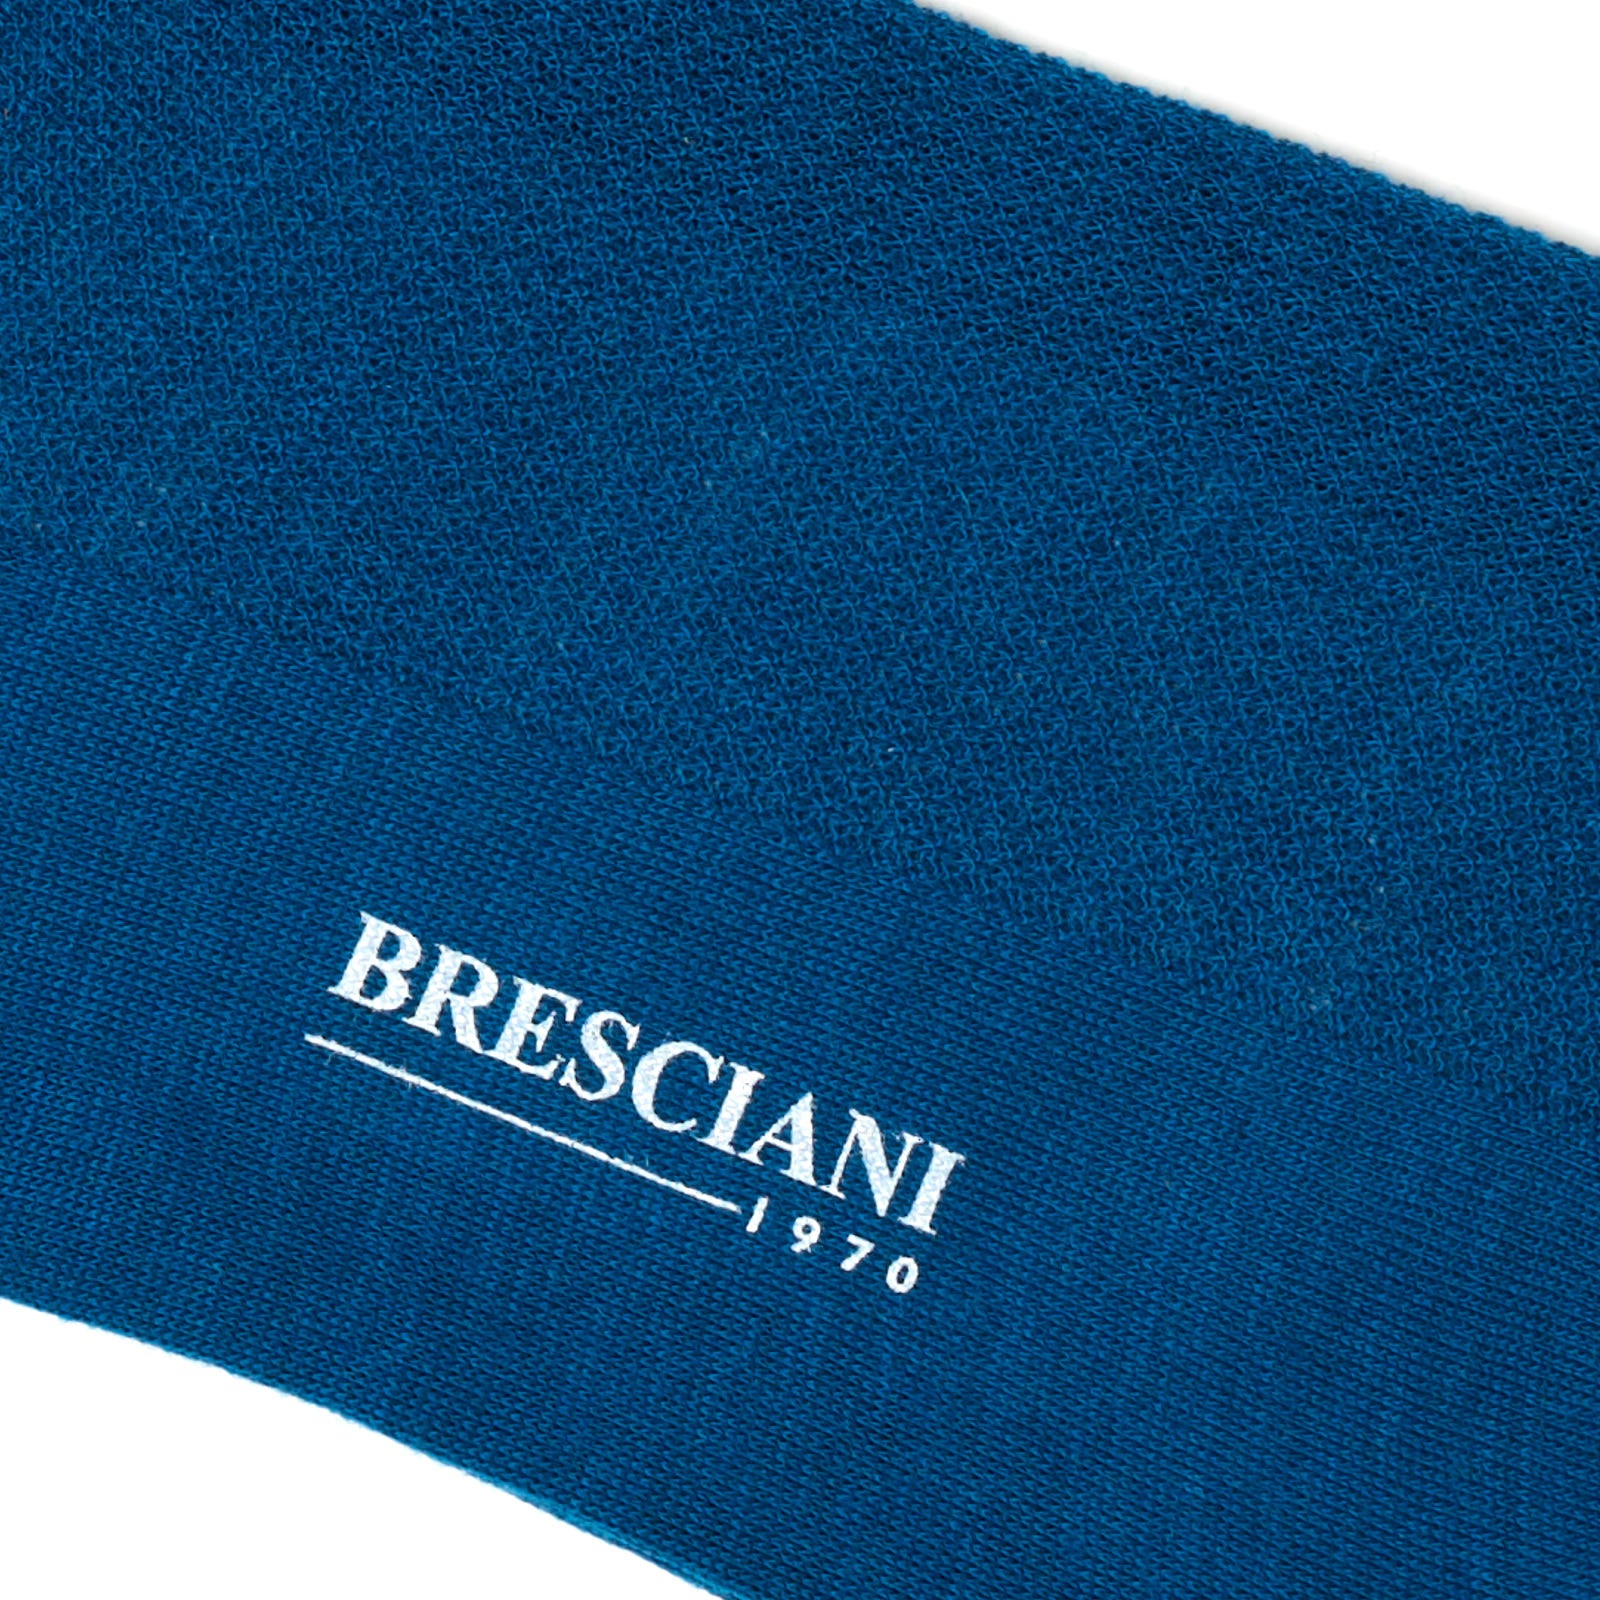 BRESCIANI Wool Micro-Design Mid Calf Length Socks US M-L BRESCIANI